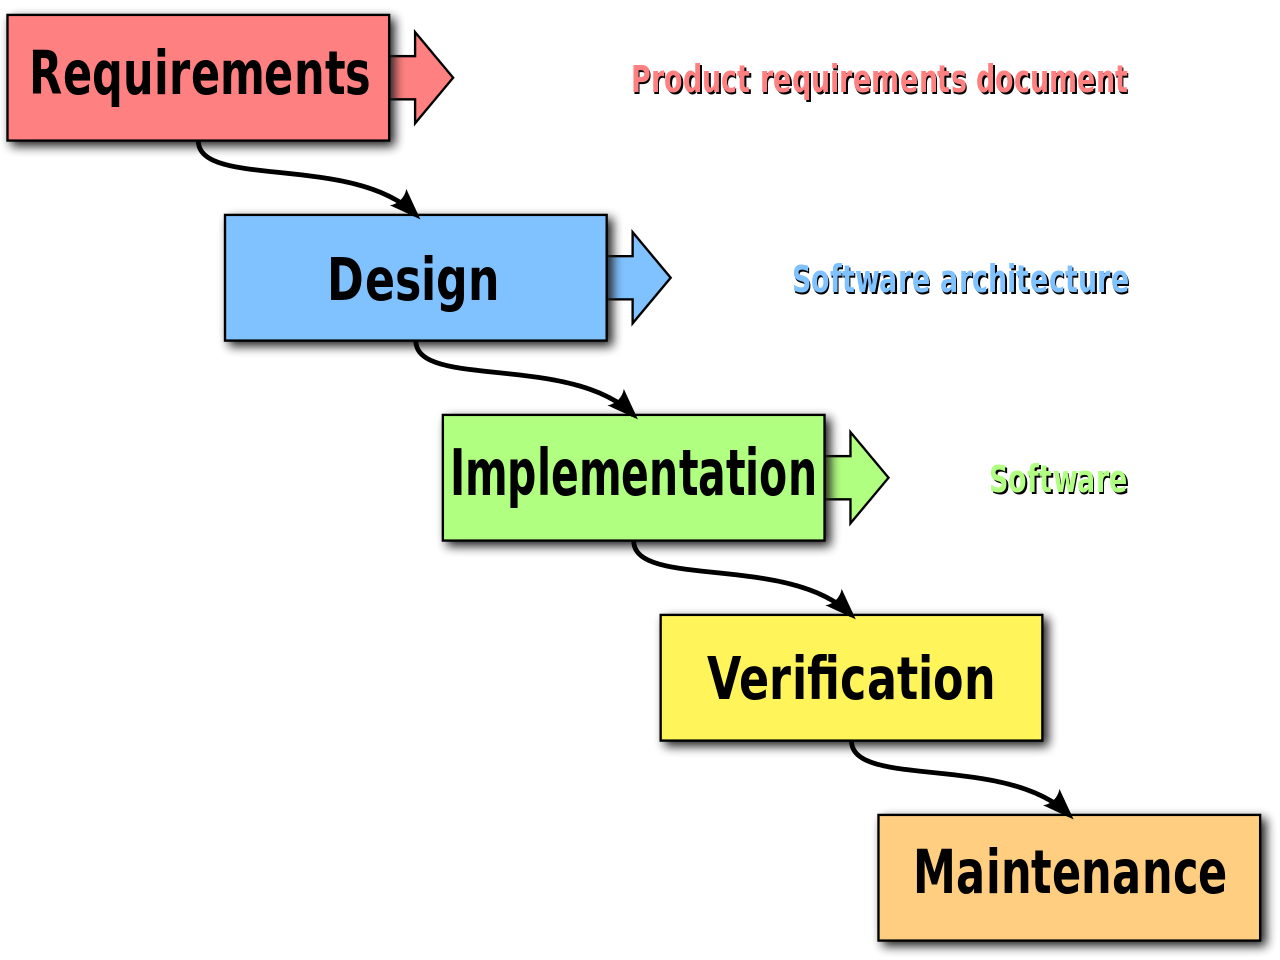 Product Development Process 101 - Smartsheet